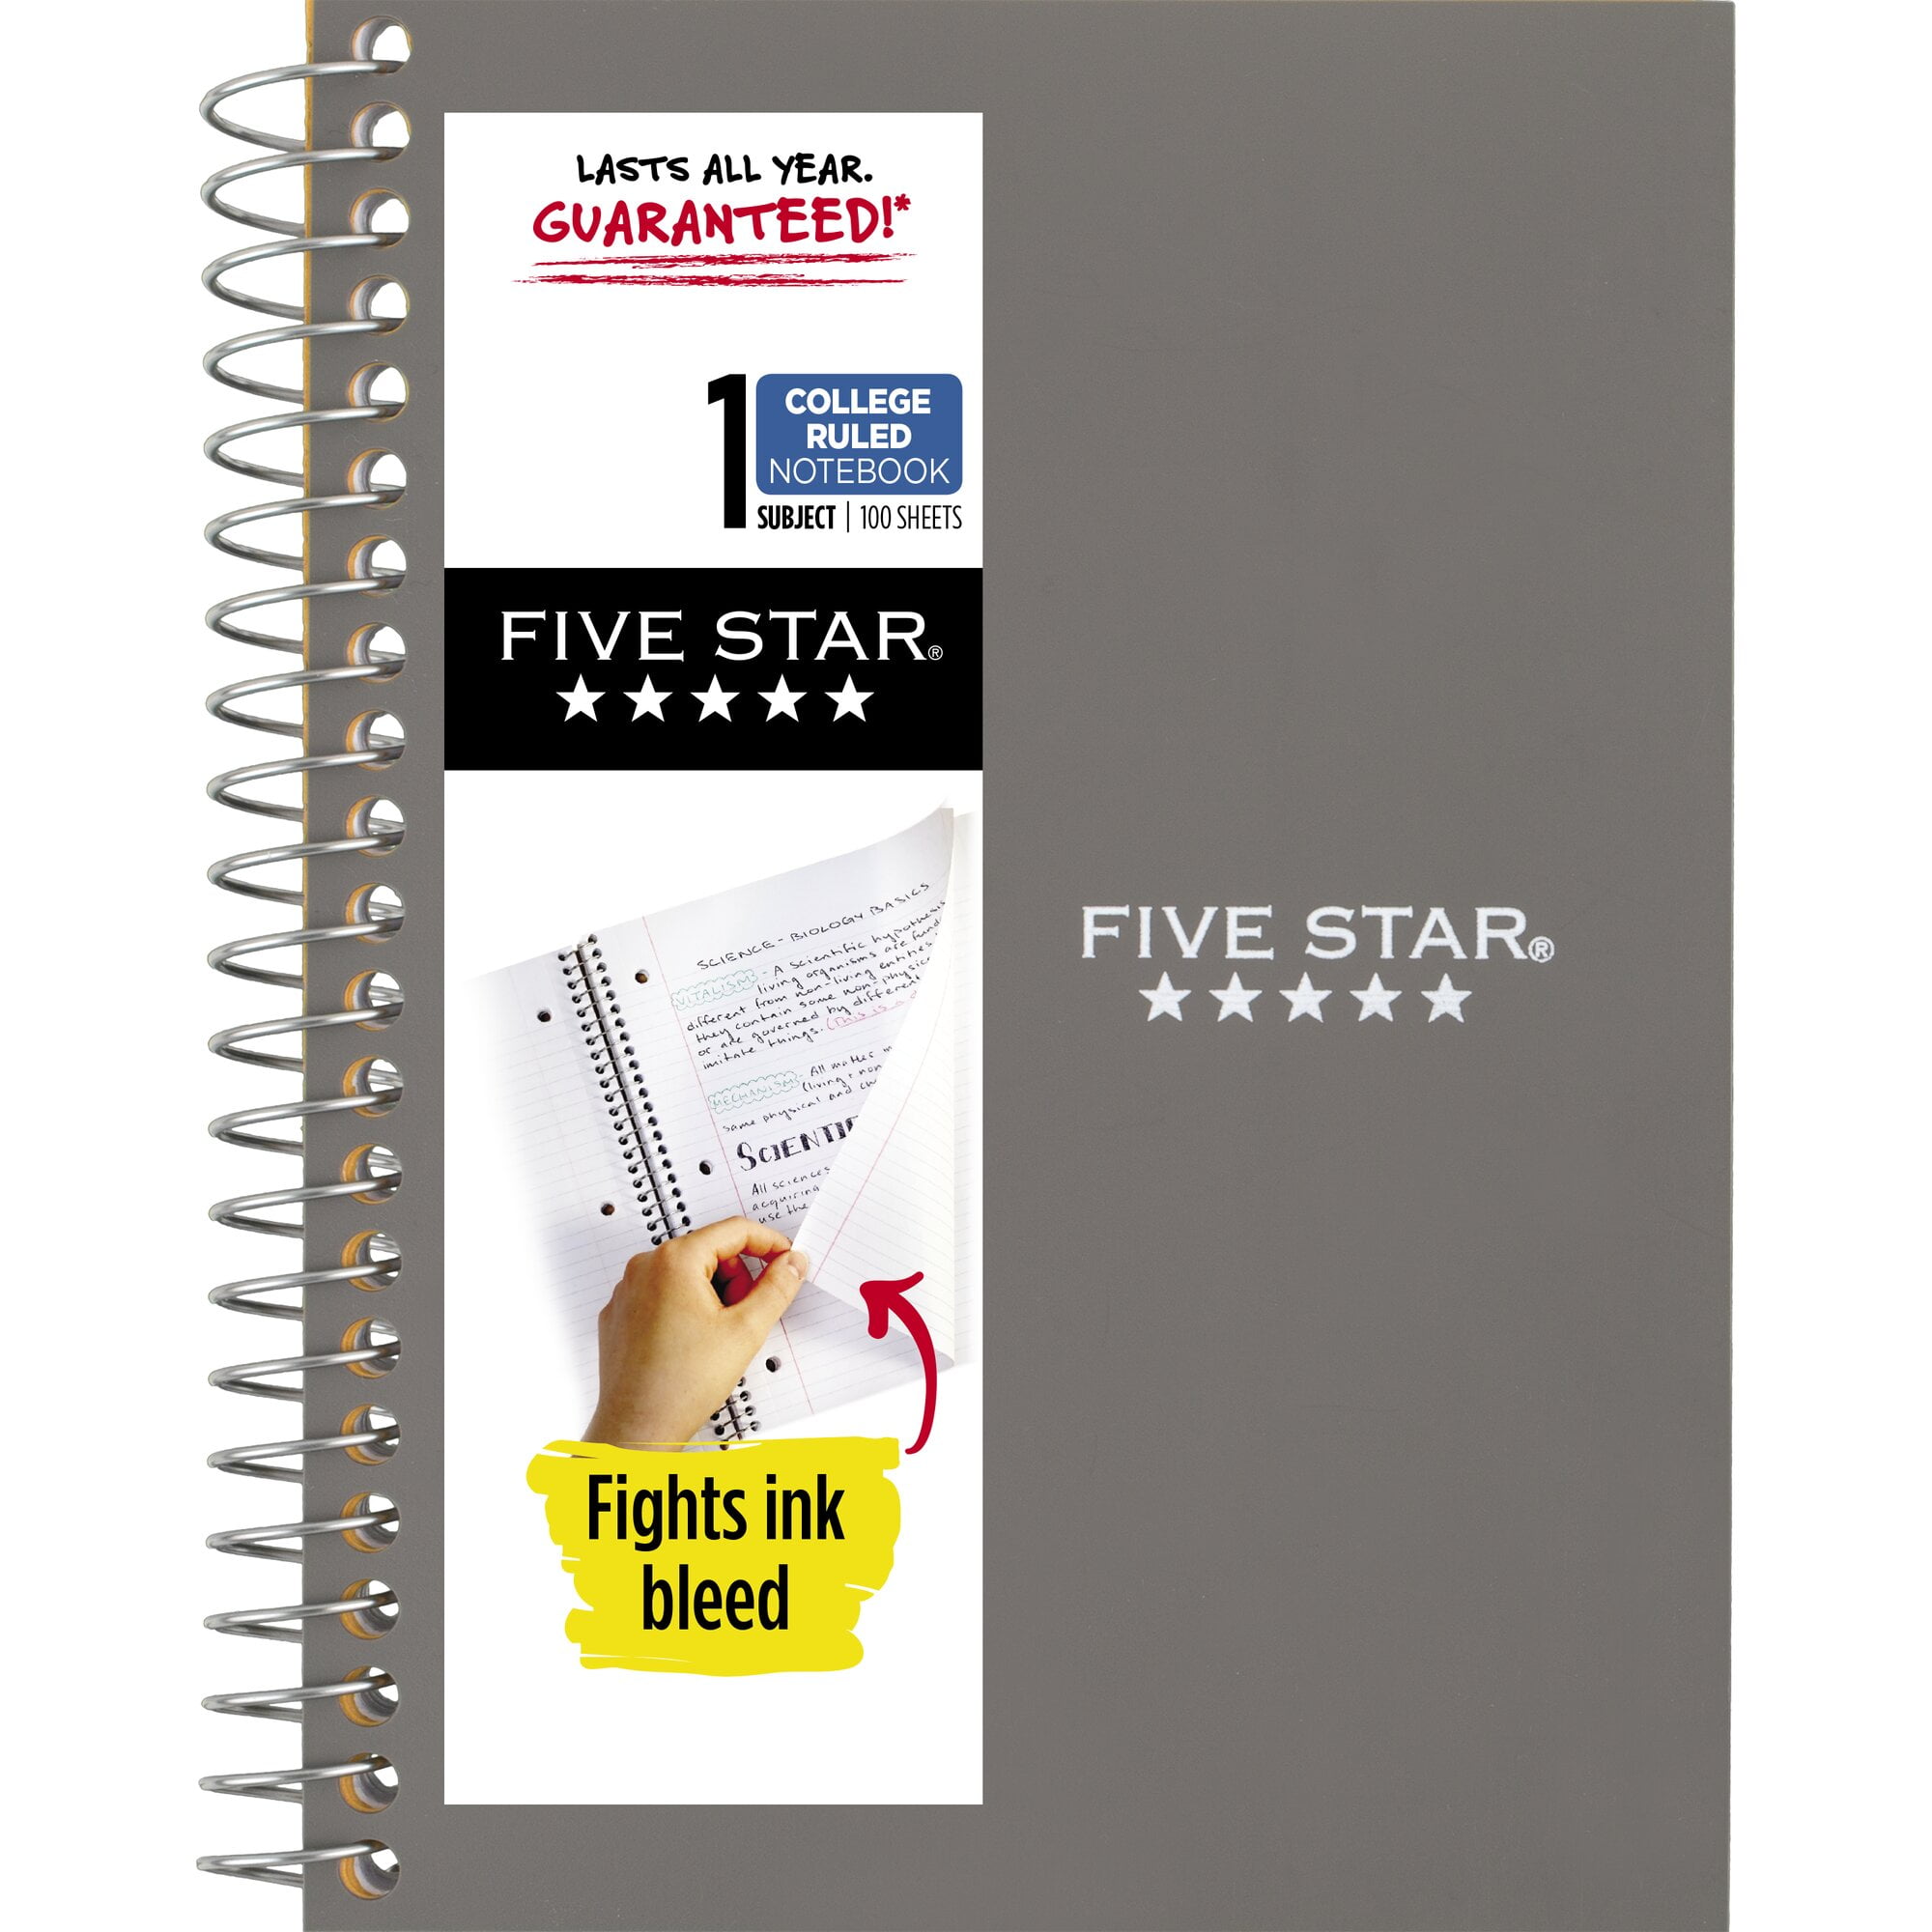 Office Supplies: 6-Pack Five Star Spiral Notebooks $12, 20-Pack